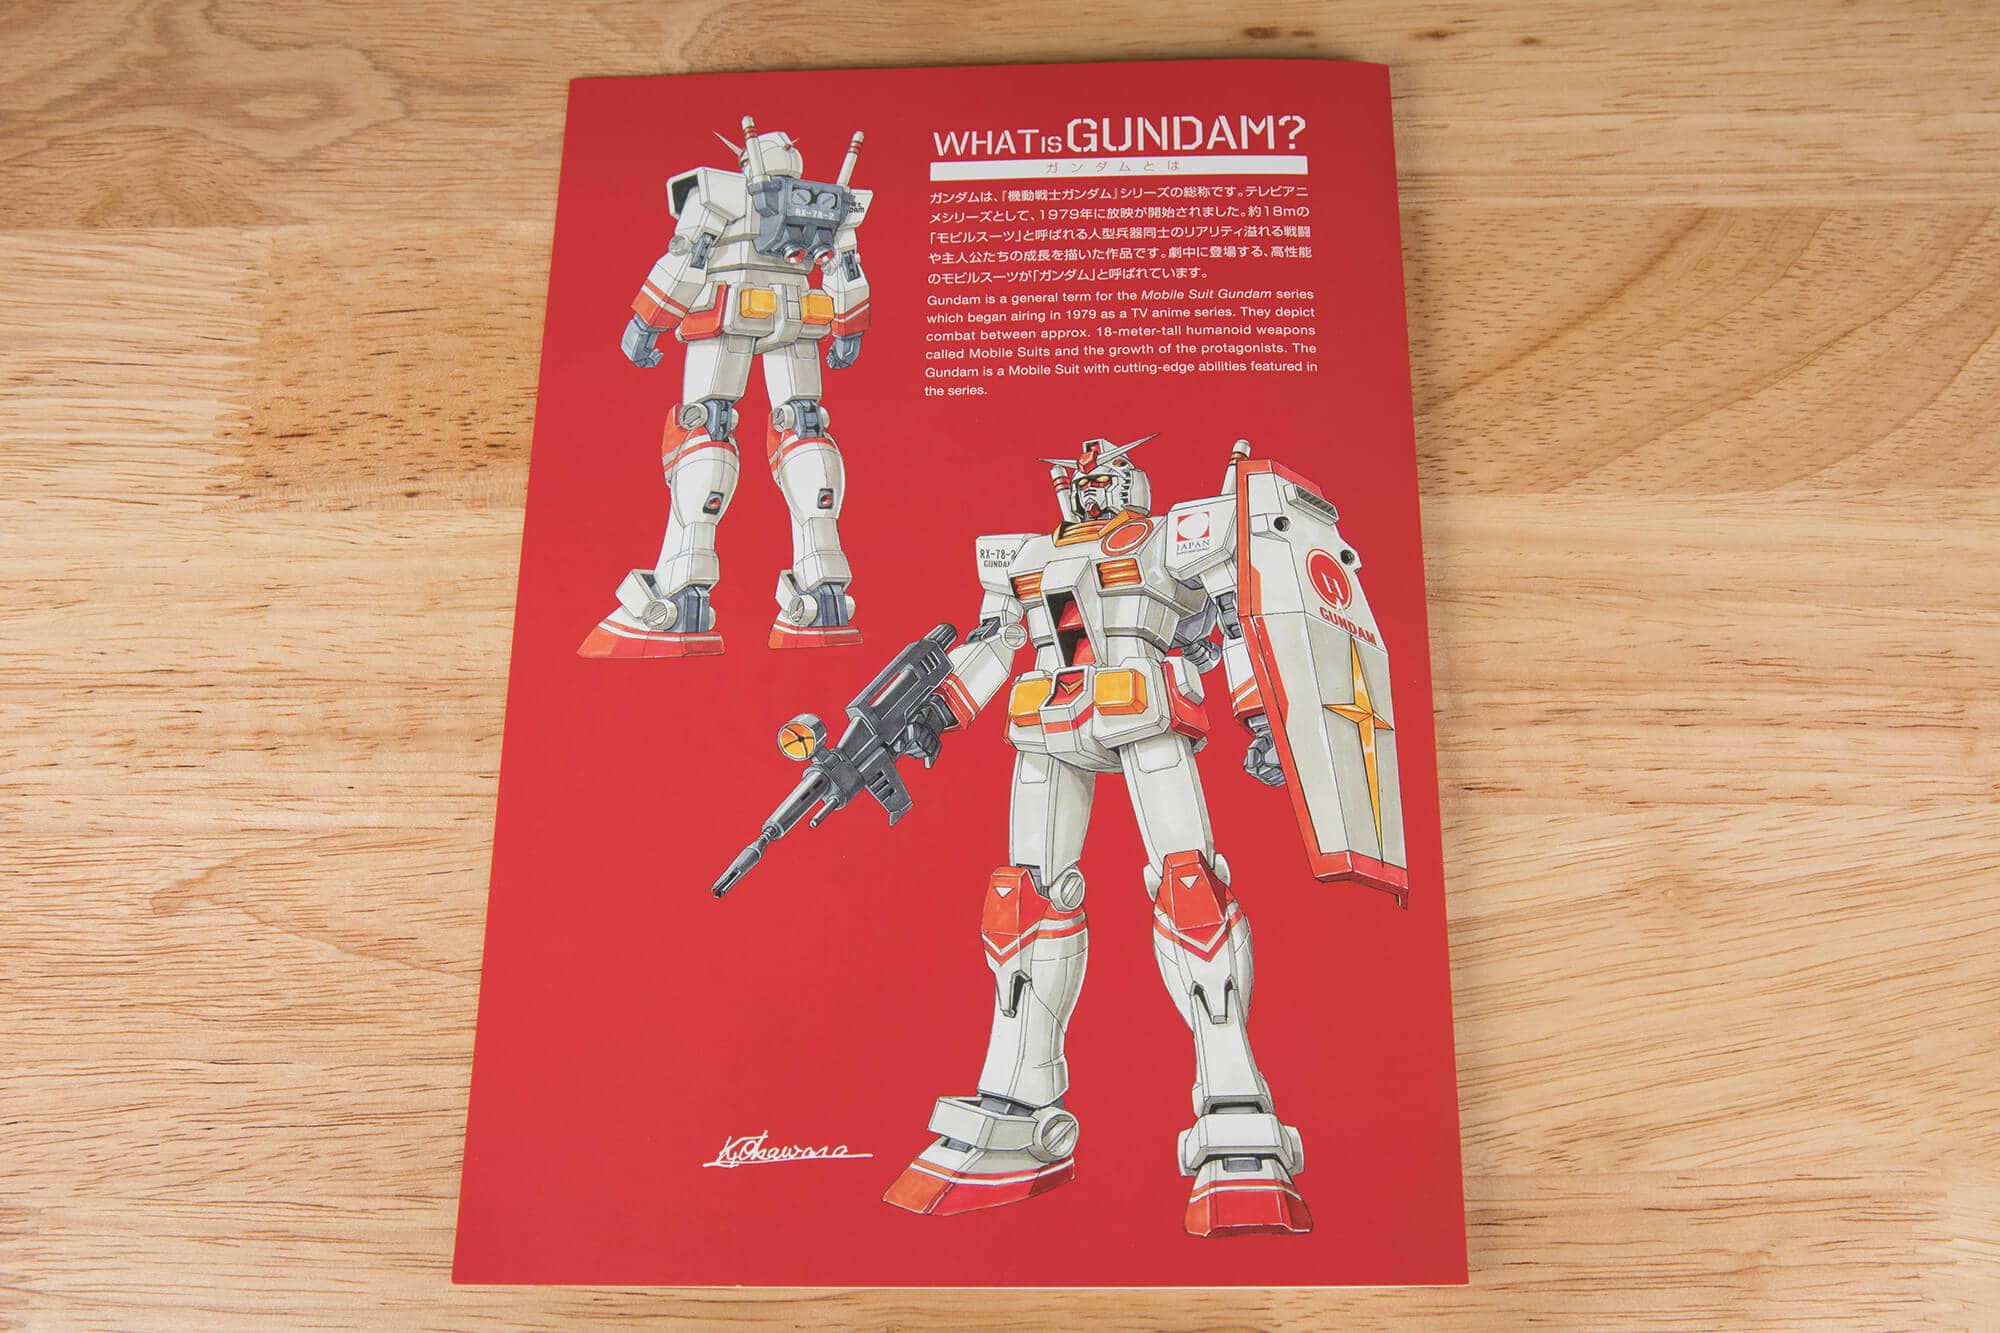 HG RX-78-2 Gundam [PR ambassador of the Japan Pavilion, Expo 2020 Dubai] Gundam Model Kit Booklet